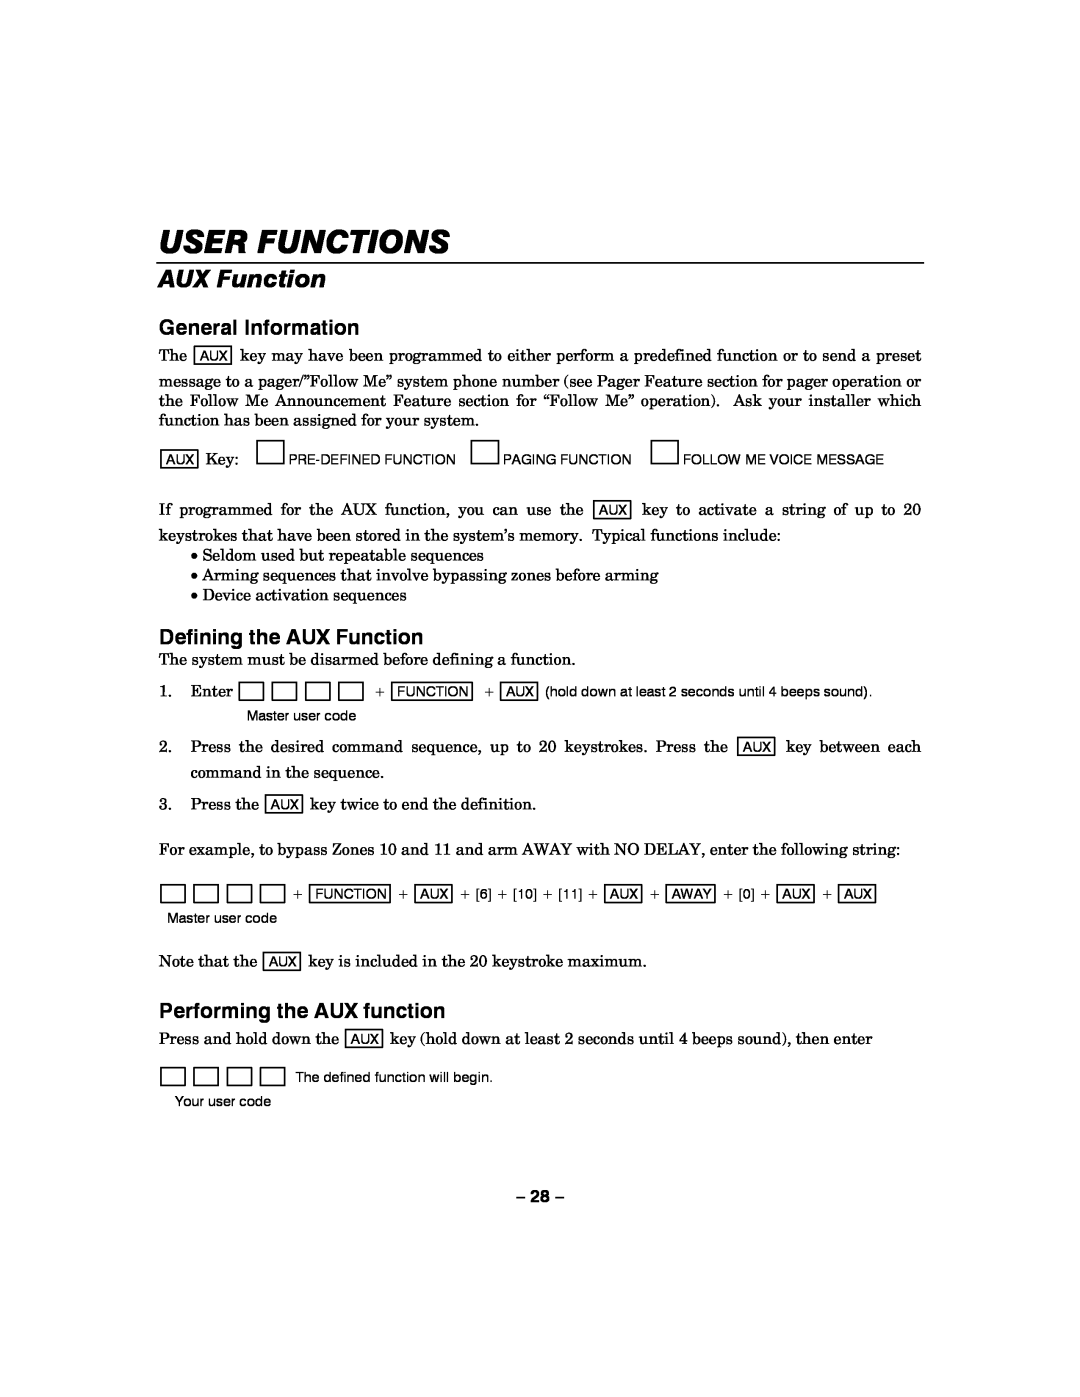 Honeywell LYNXR-2 manual Defining the AUX Function, Performing the AUX function, User Functions, General Information 